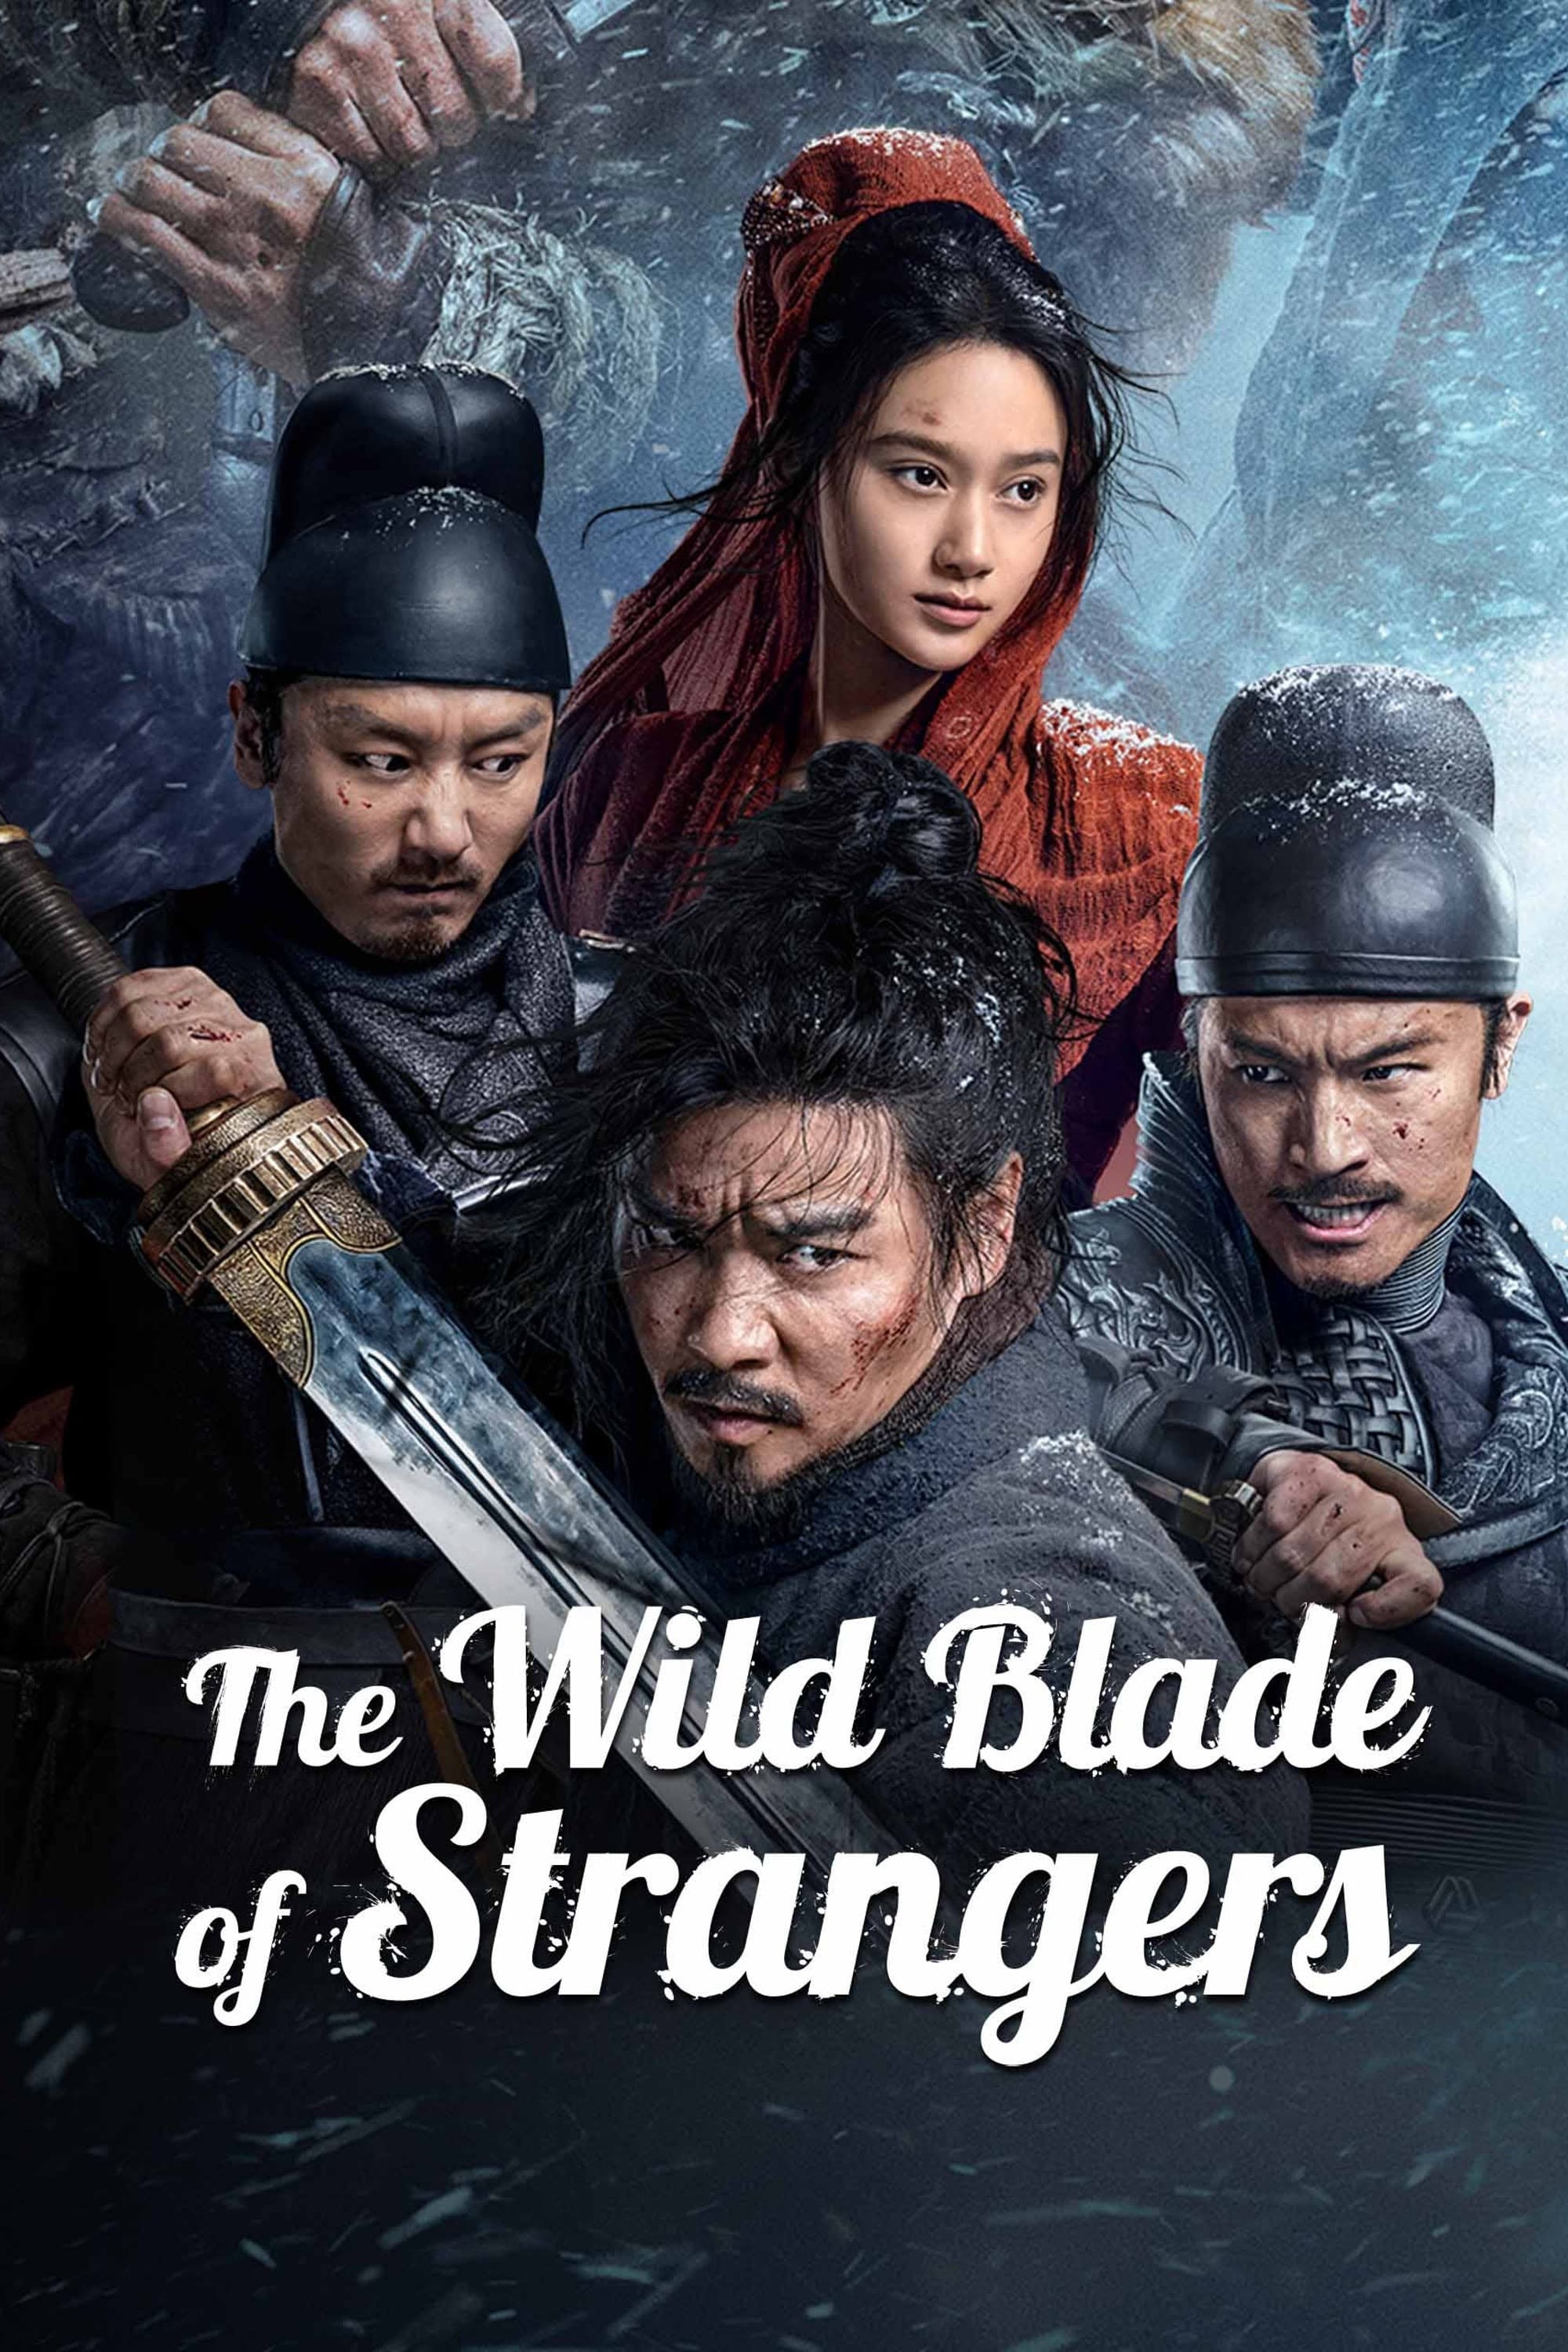 The Wild Blade of Strangers